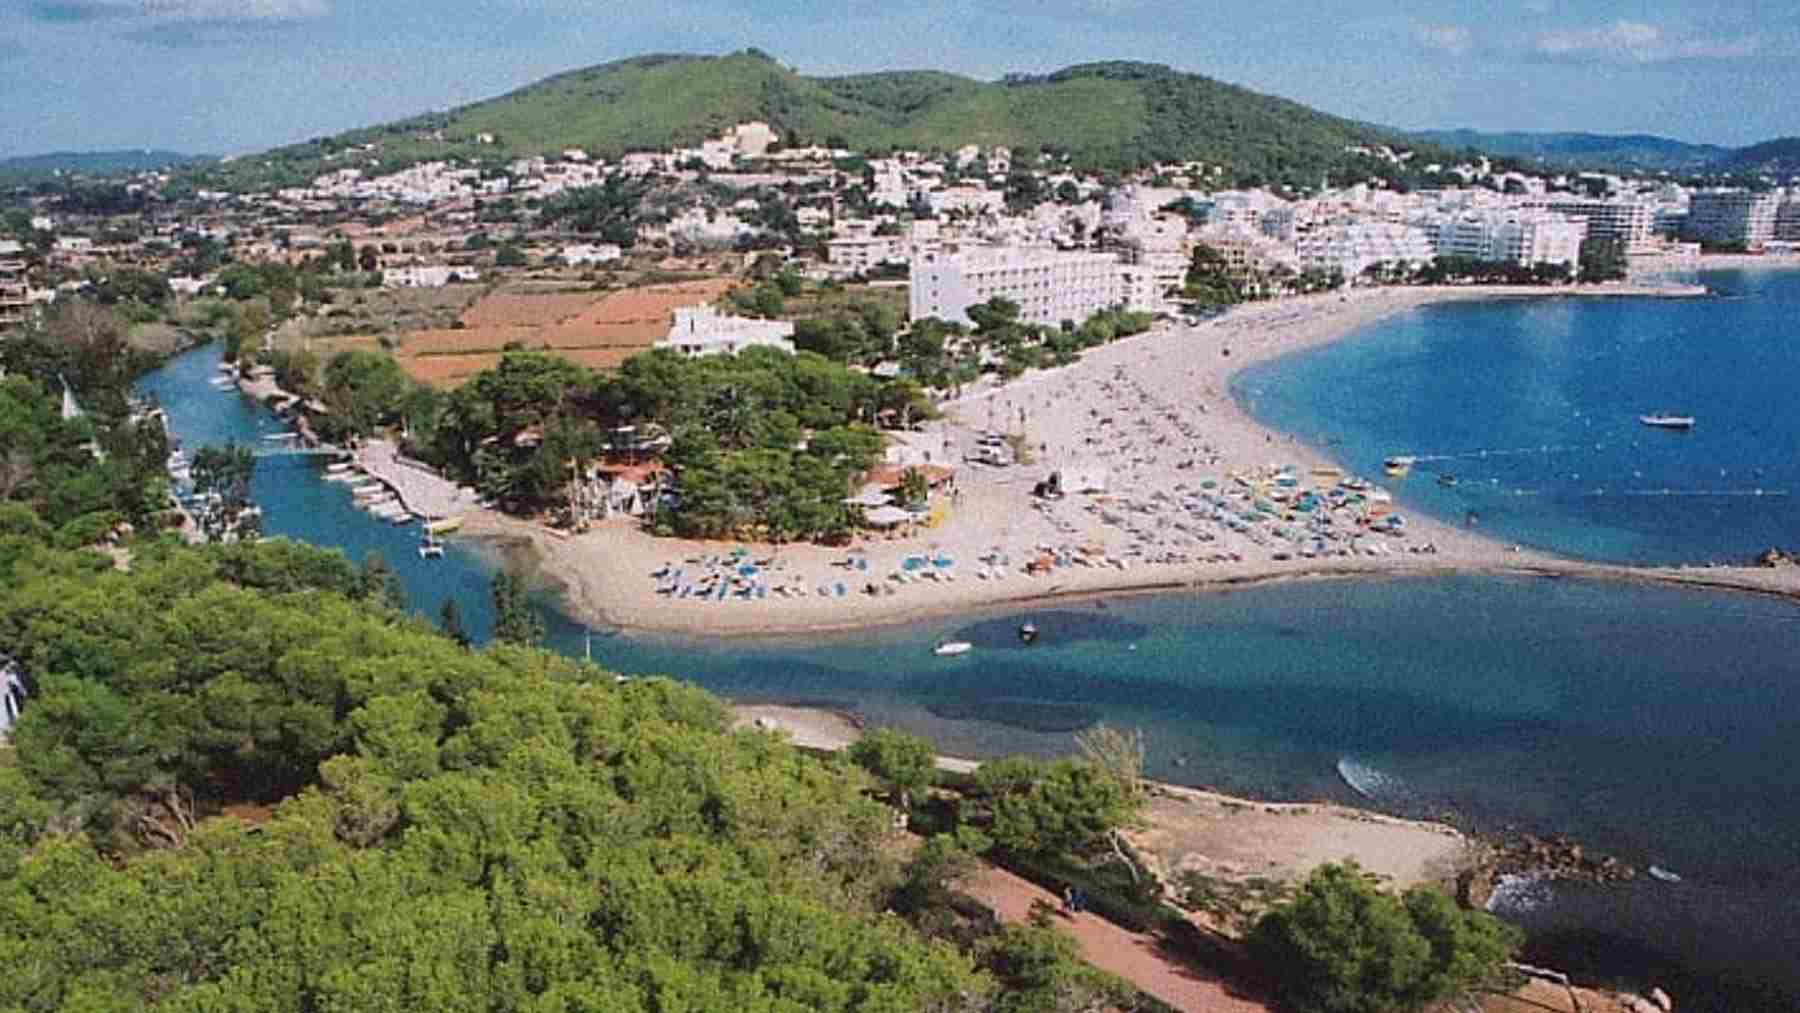 Vista aérea de la localidad de Santa Eulària des Riu en Ibiza.